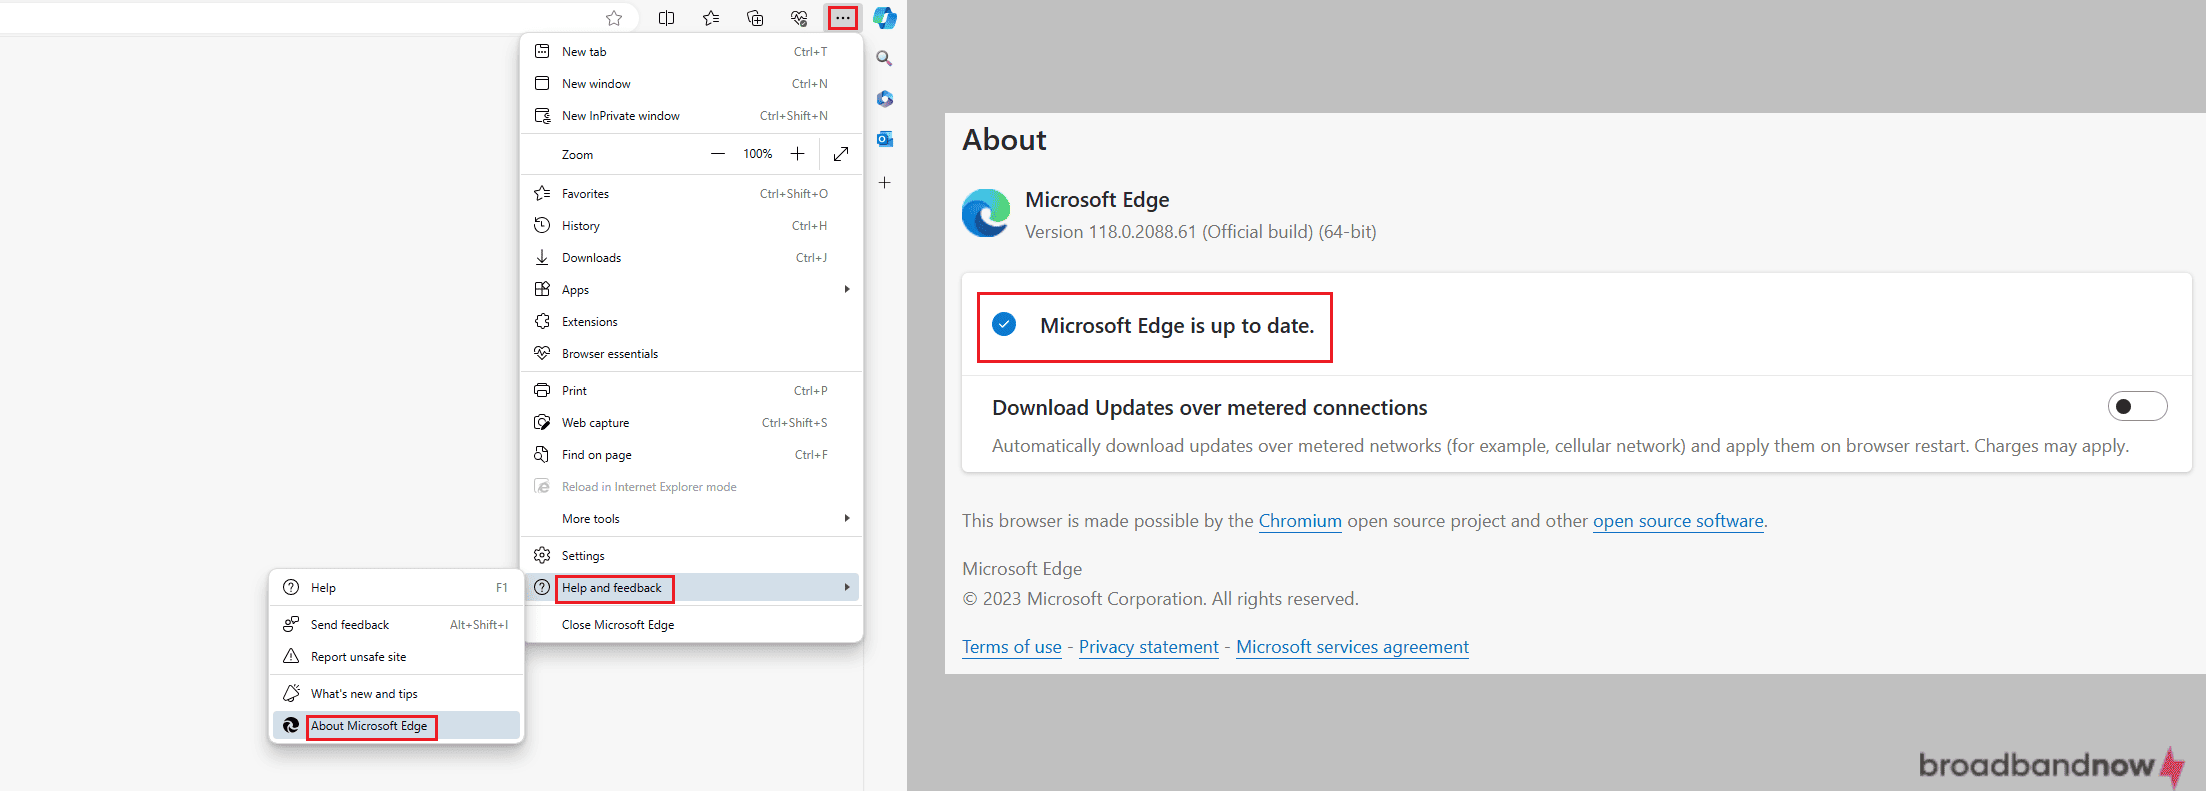 Screenshots of Microsoft Edge update process